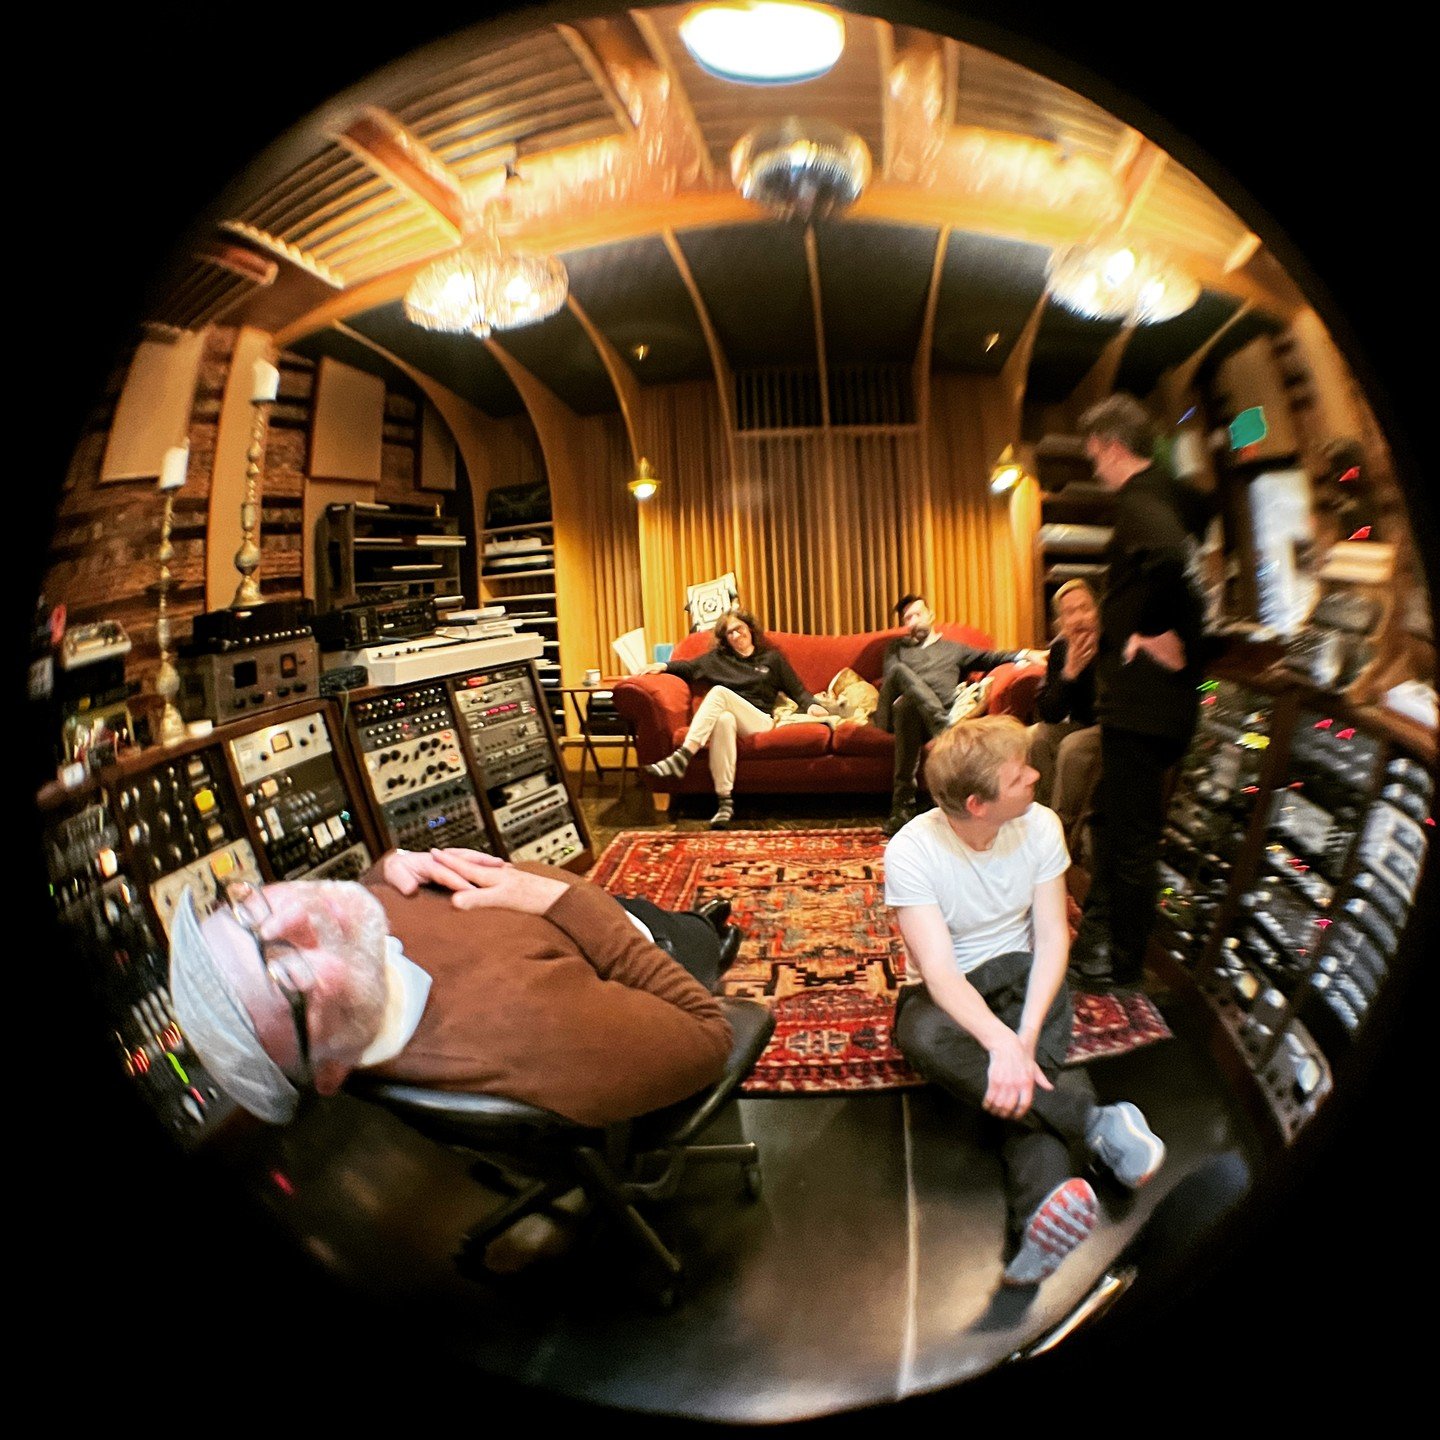 The next Todd Sickafoose recording in progress at Flora Recording &amp; Playback. Day 3. Its making us all very happy. @floramartine @todd_sickafoose @tedpoor @instagambz @physlew @adamlevyguitar